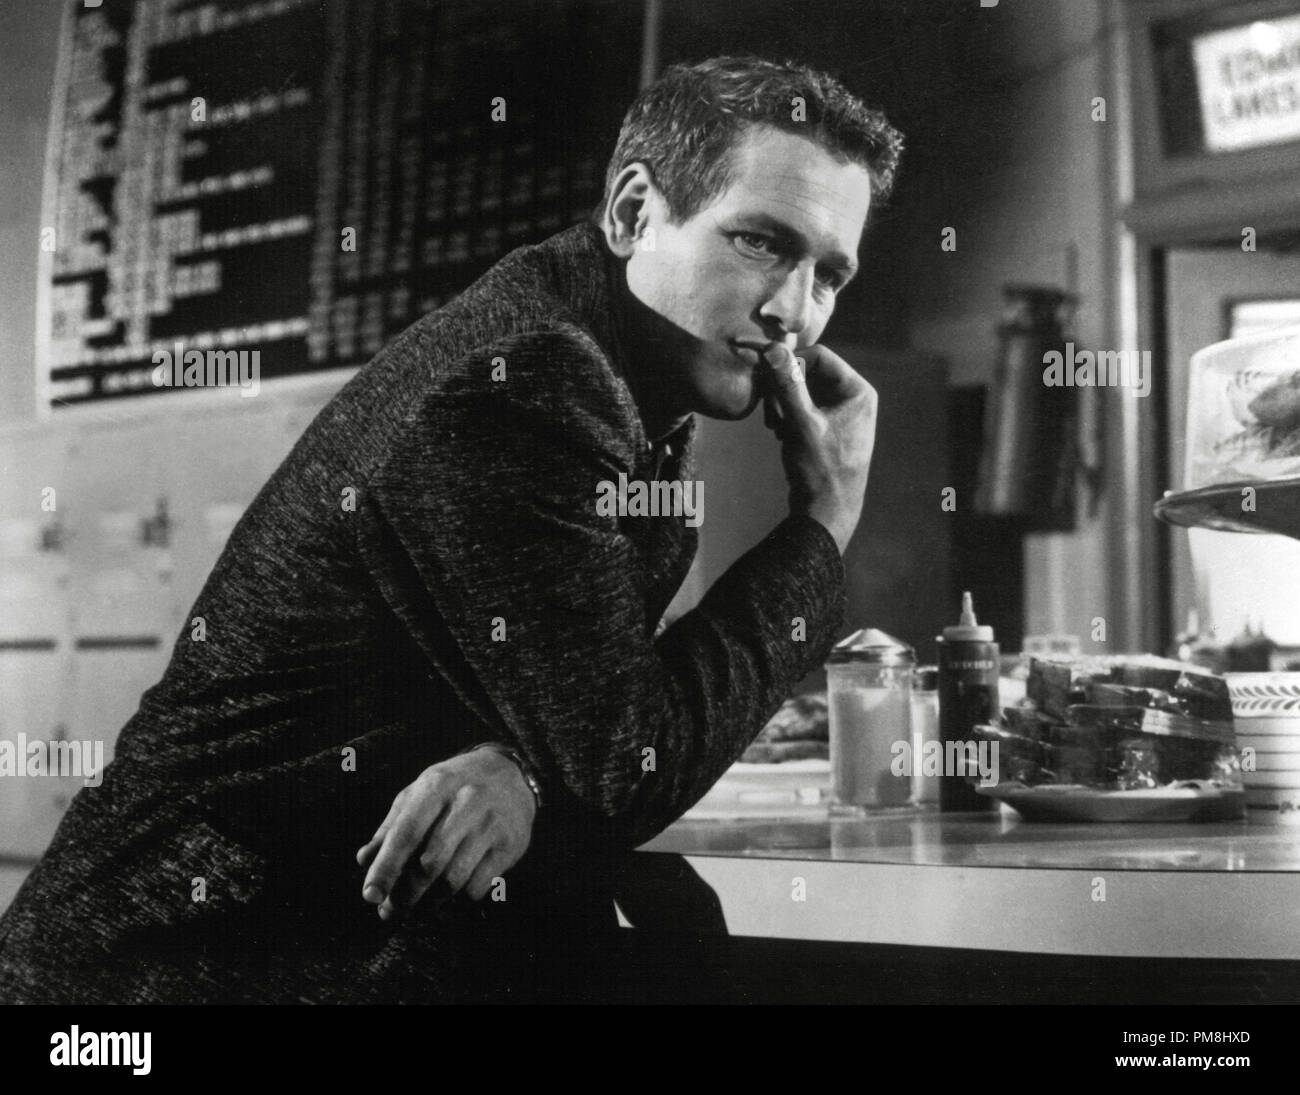 (Archivierung klassische Kino - Paul Newman Retrospektive) 'Hustler' Paul Newman 1961 Twentieth Century Fox Datei Referenz # 31510 036 THA Stockfoto